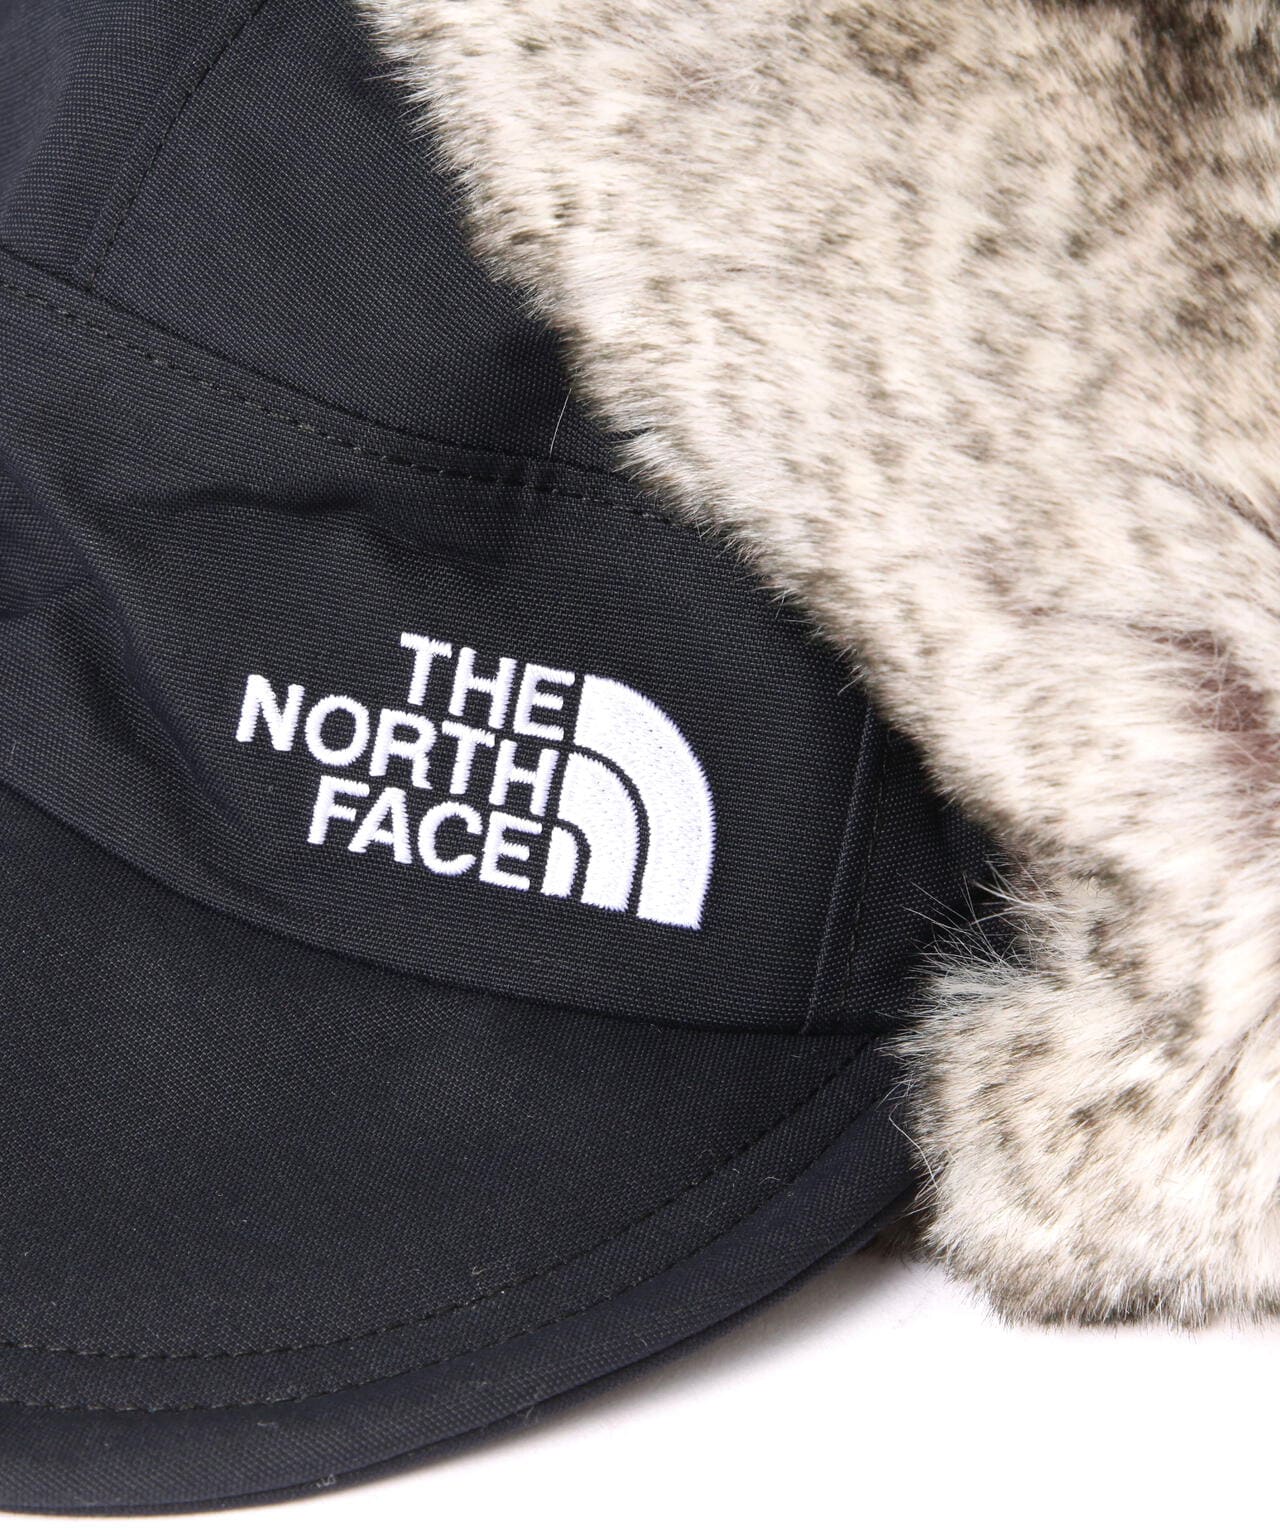 THE NORTH FACE/ザ・ノースフェイス/Frontier Cap/フロンティア 